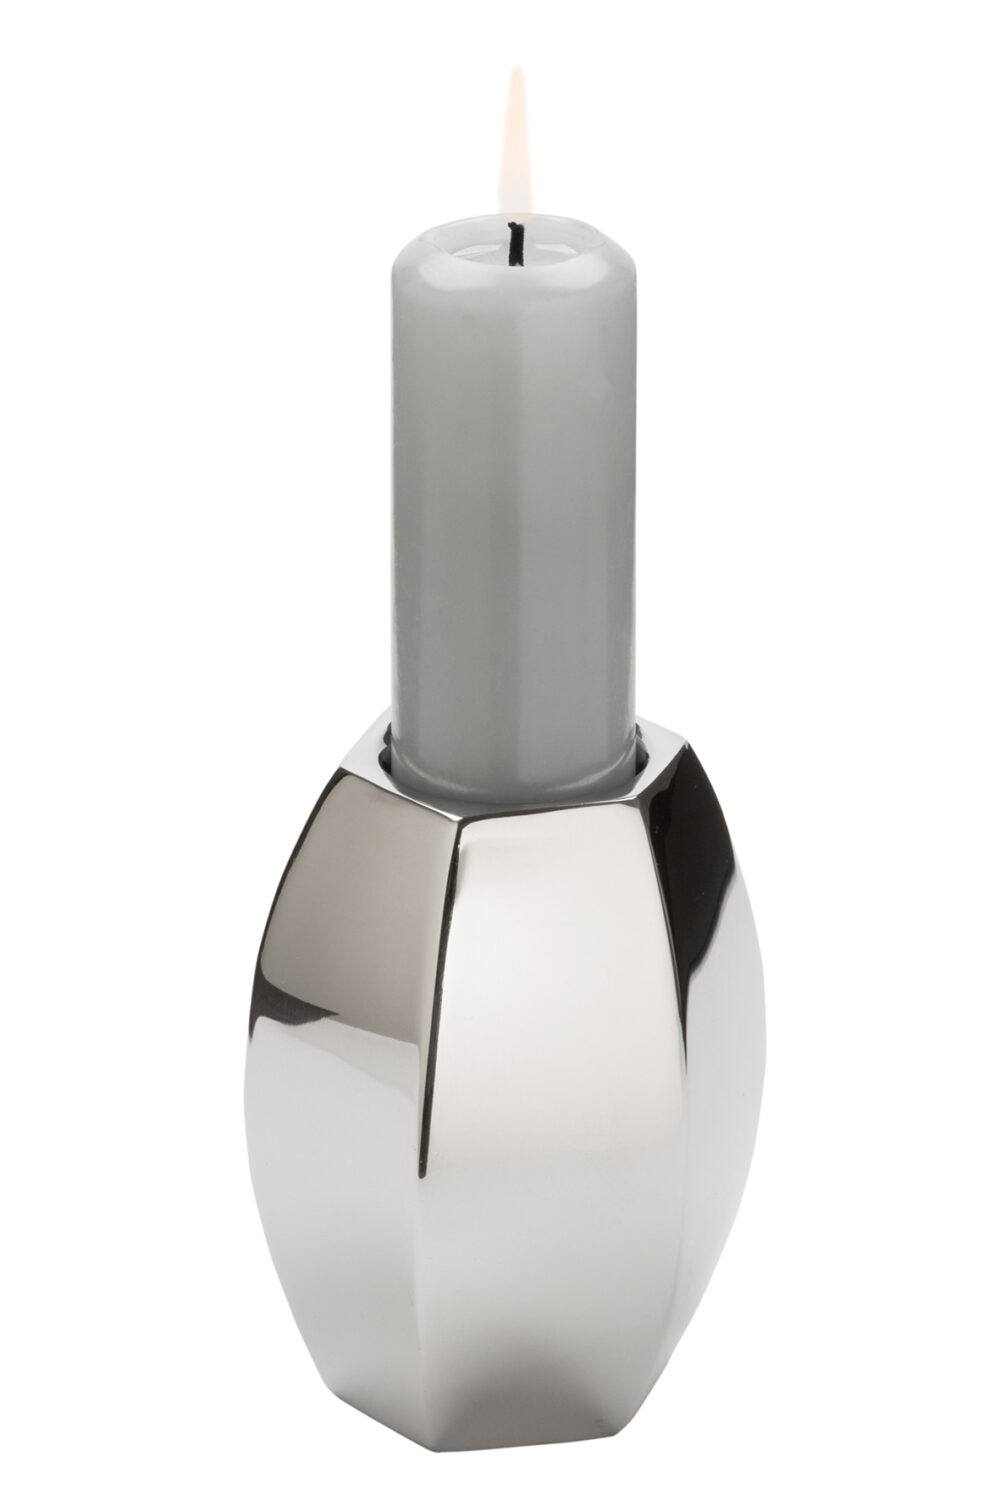 158504 Teelichthalter Kerzenhalter Kerzenleuchter silber Edelstahl FARGO Fink 11 cm